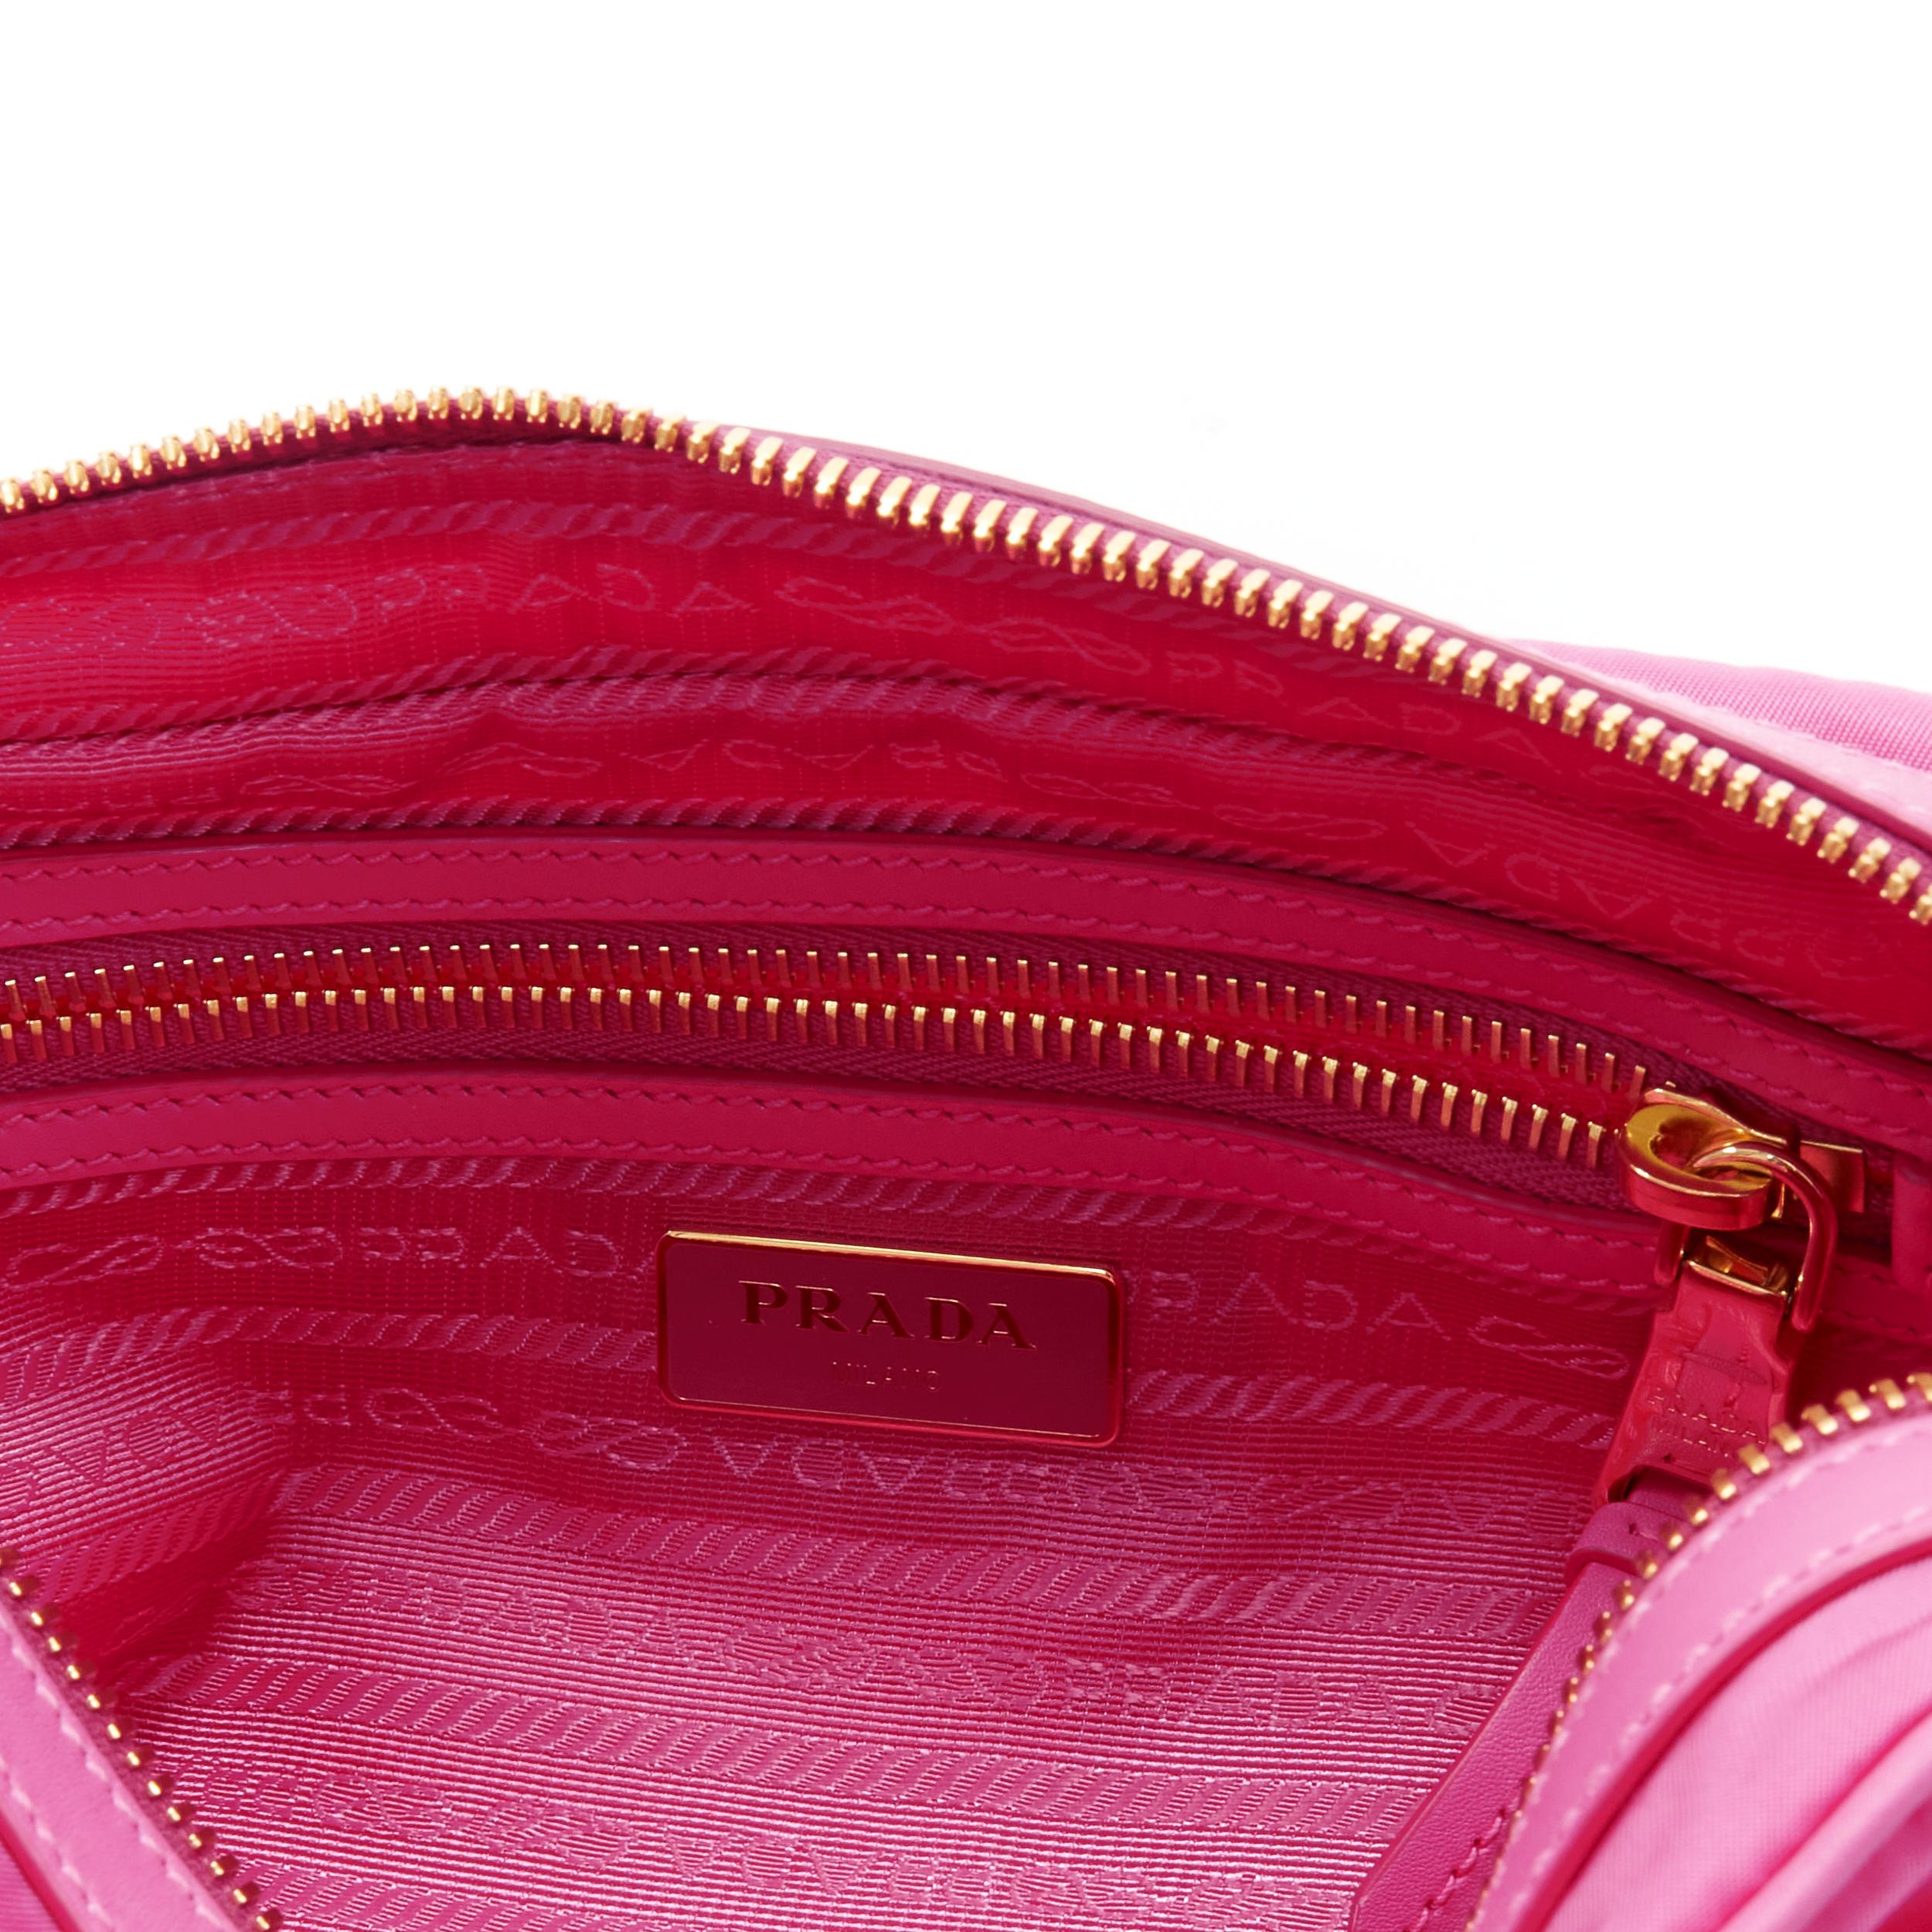 PRADA bright pink Tessuto nylon gold logo crossbody camera bag 2